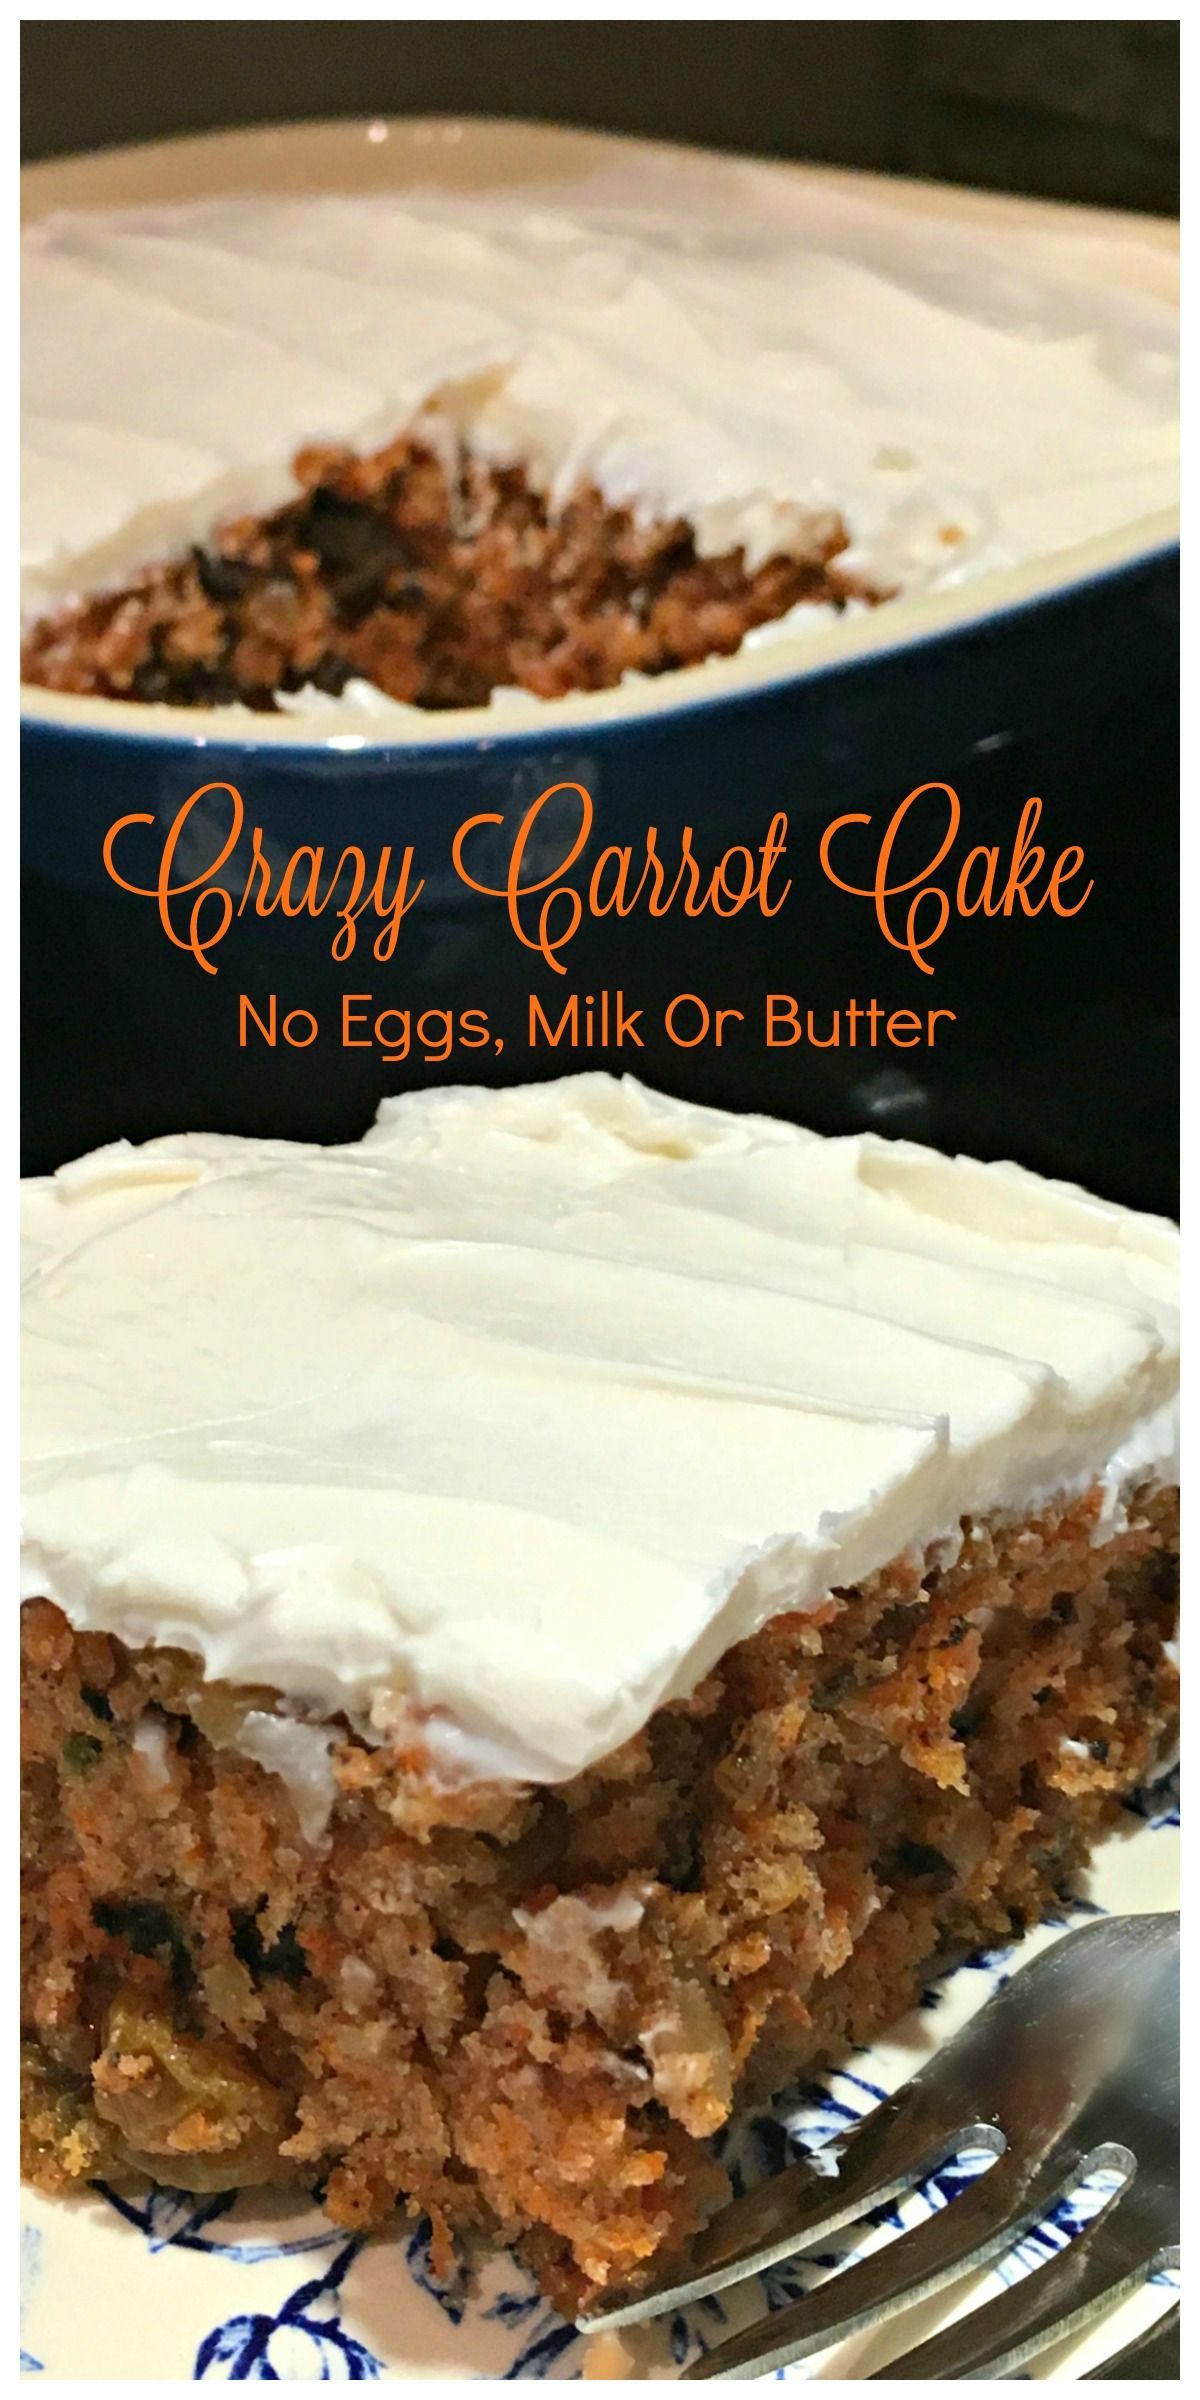 Crazy Carrot Cake - No Eggs, Milk or Butter -   18 cake Carrot eggs ideas